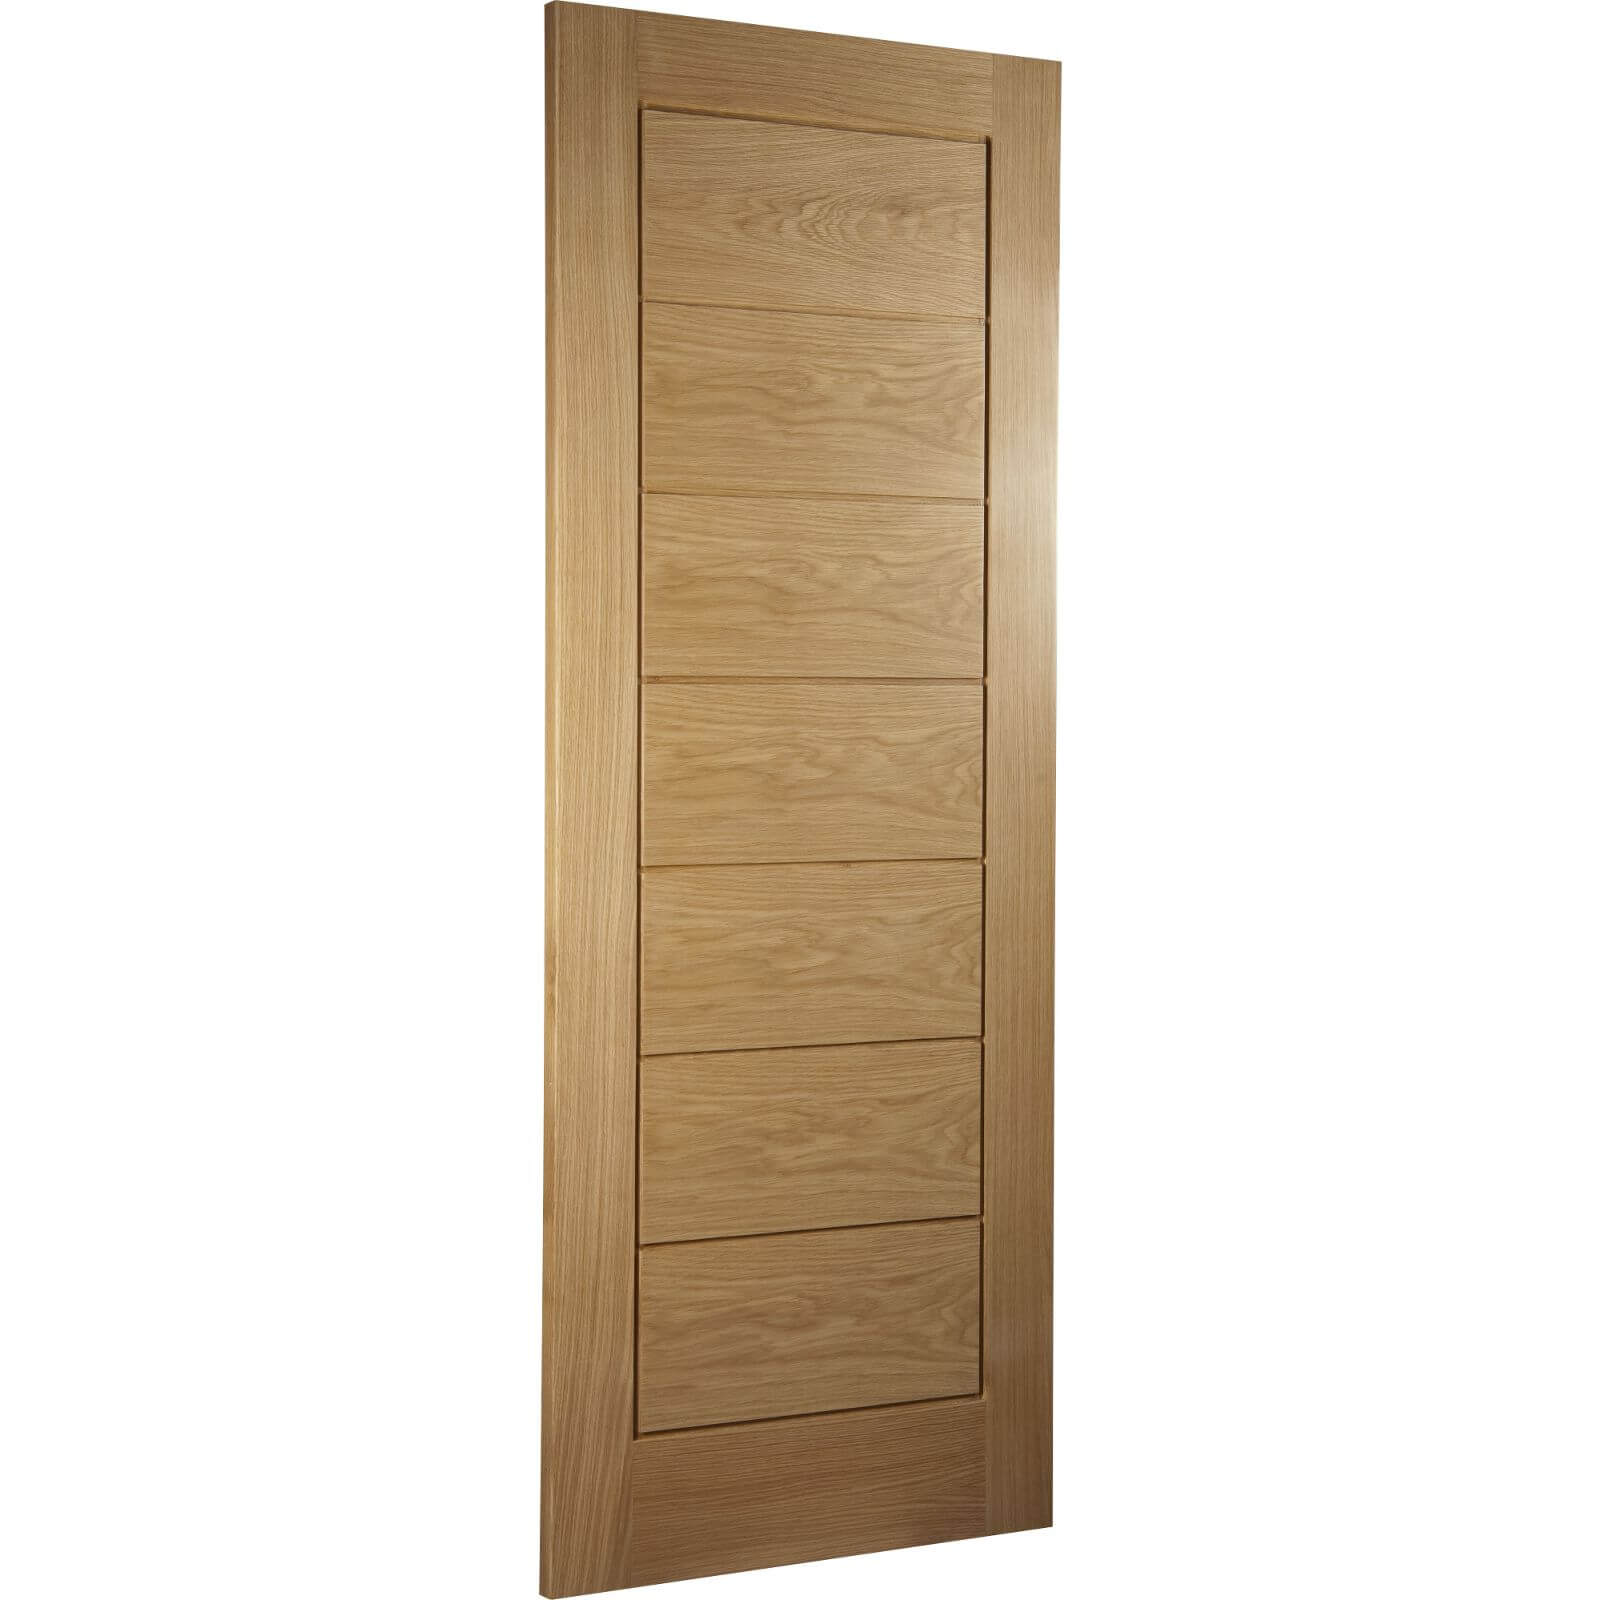 Horizontal 7 Panel White Oak Veneer Internal Door - 726mm Wide